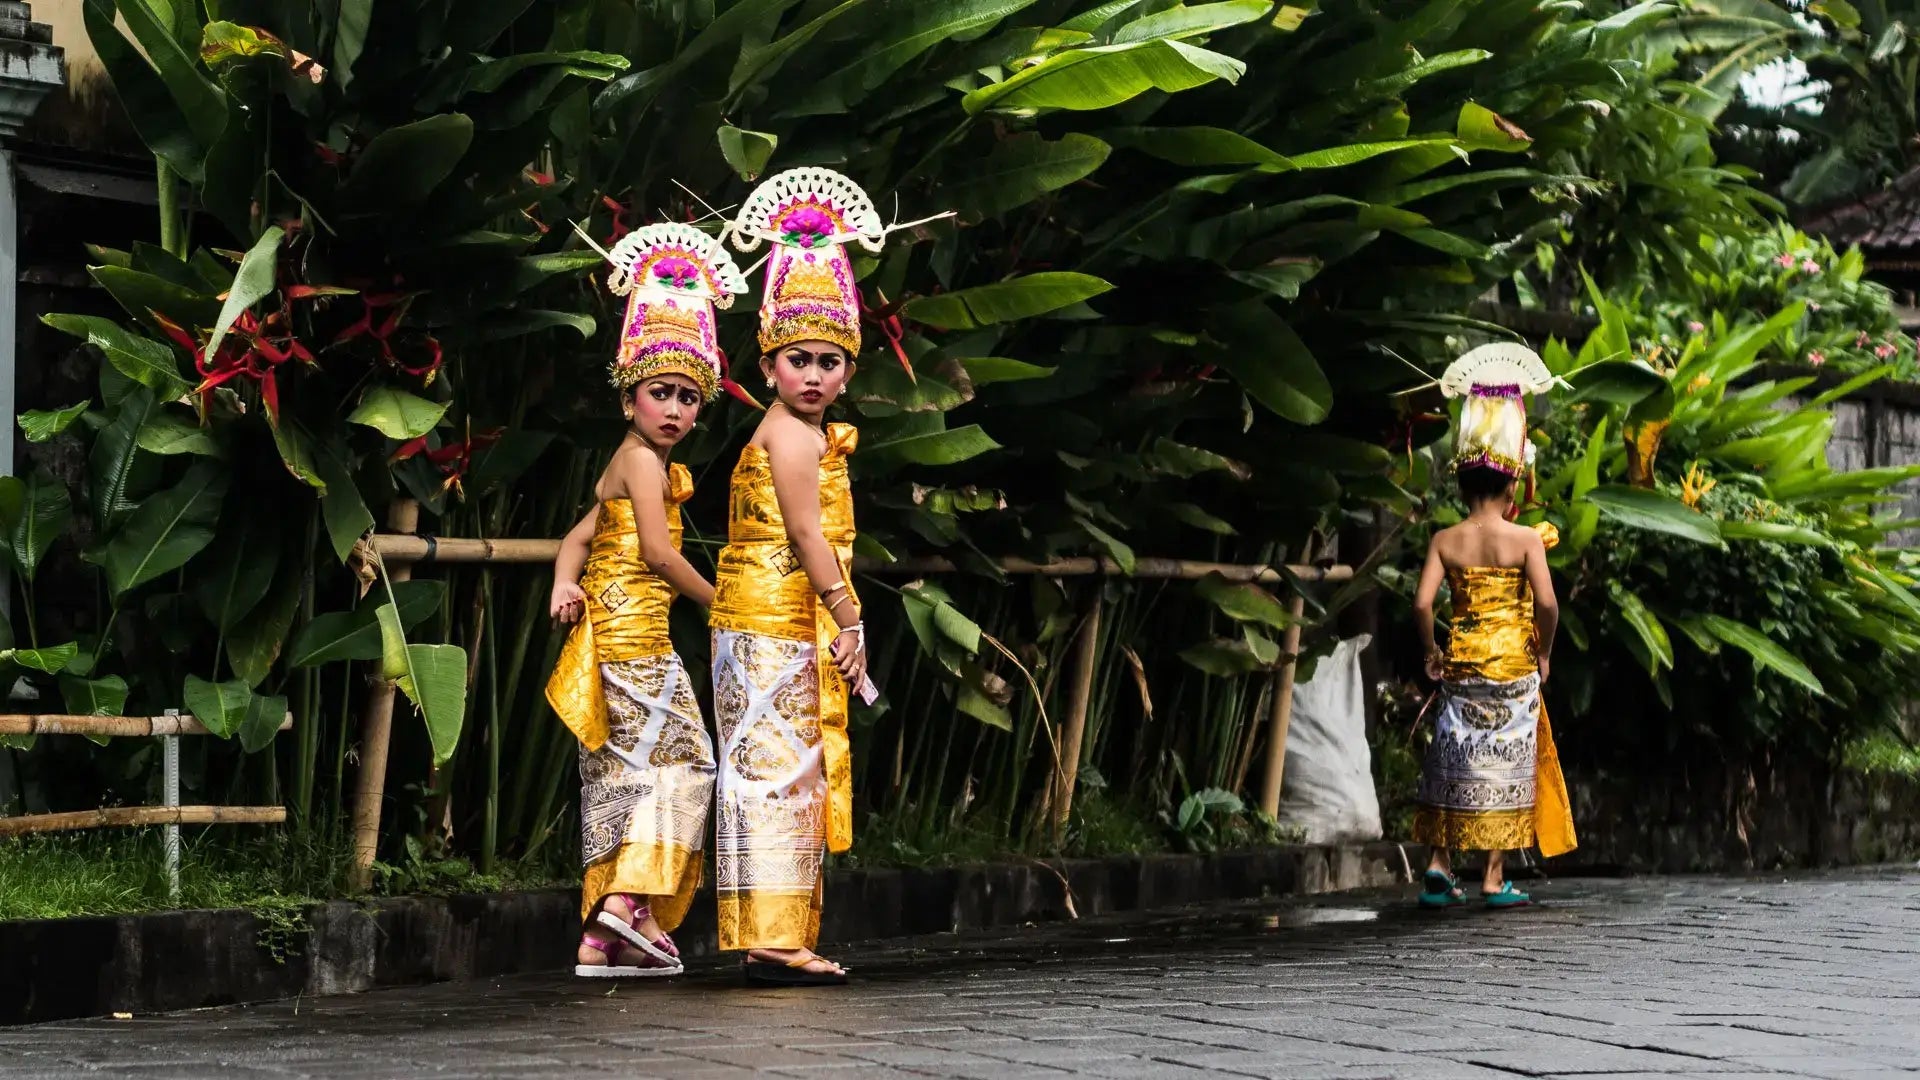 balinese girls in ceremonial dance costumes after show. Bali Vegan Book